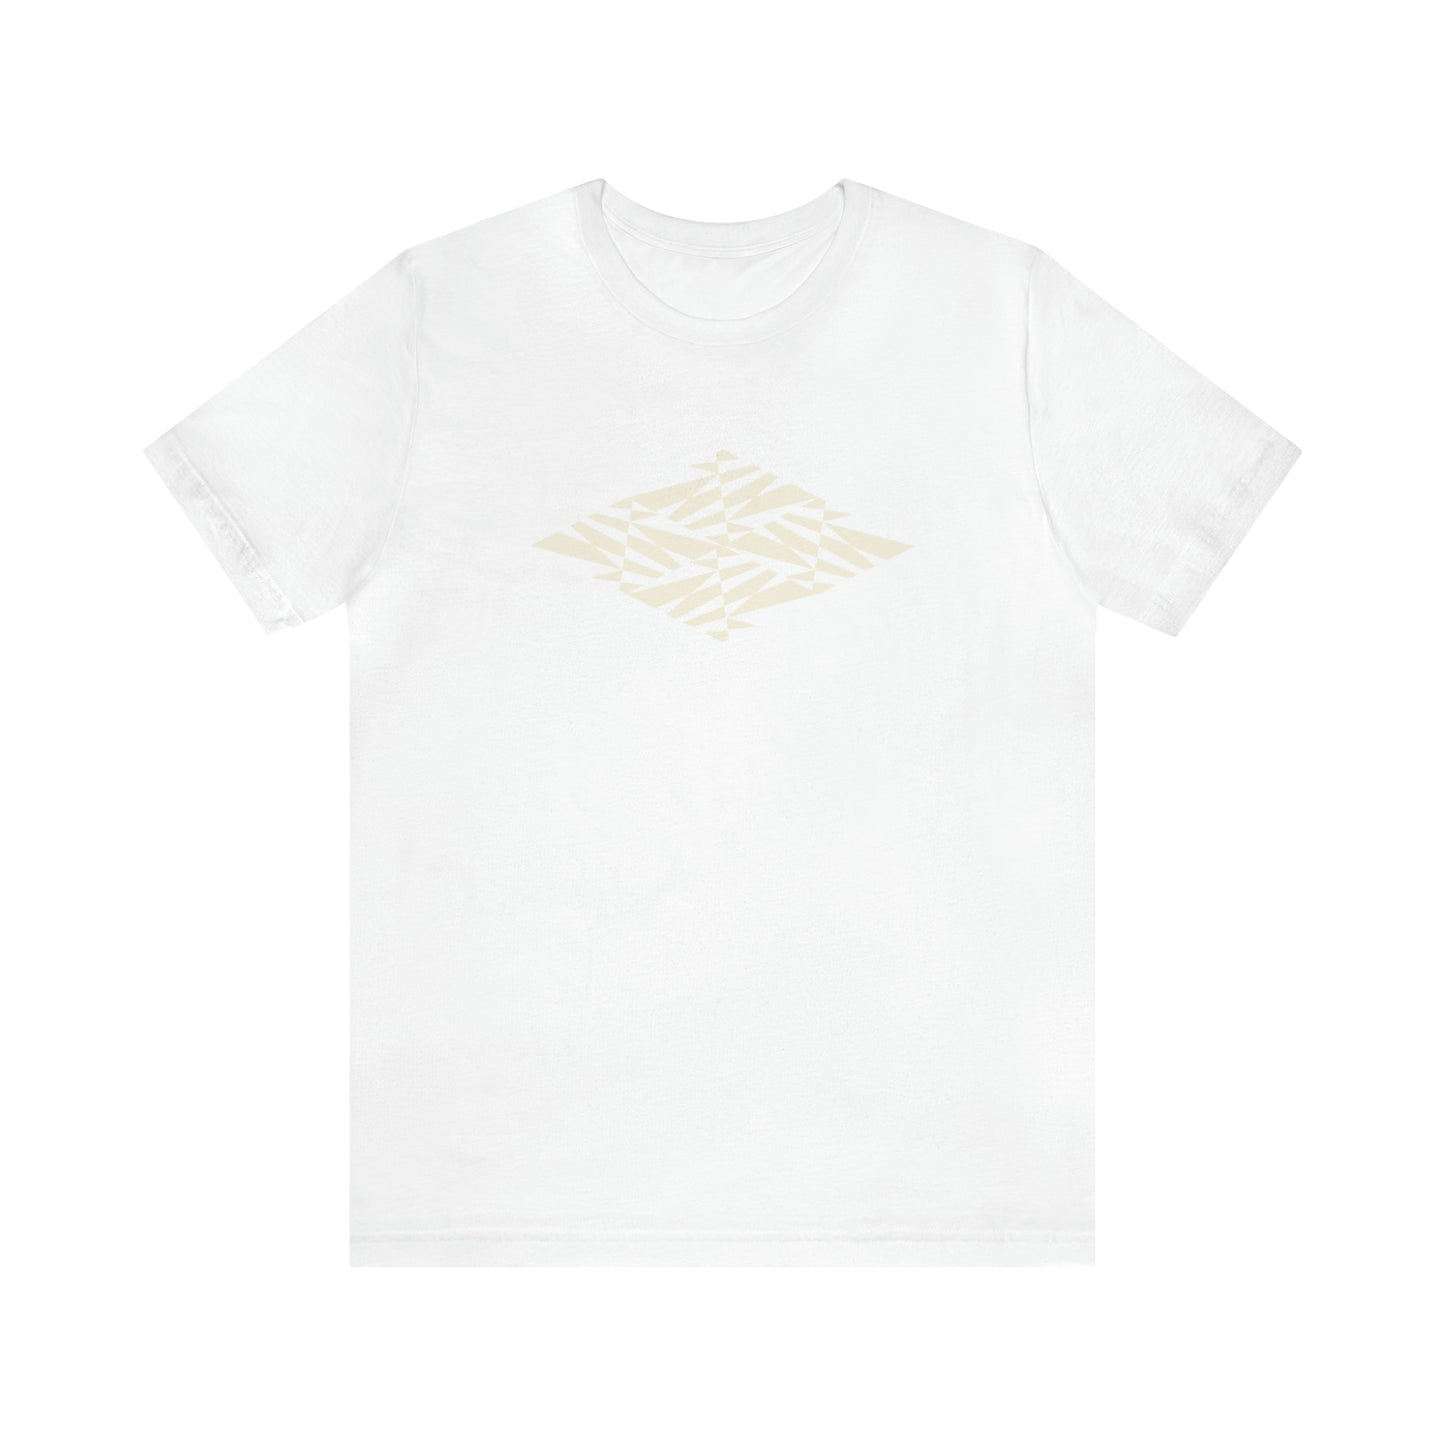 Rough Diamond 2 - Unisex T-Shirt